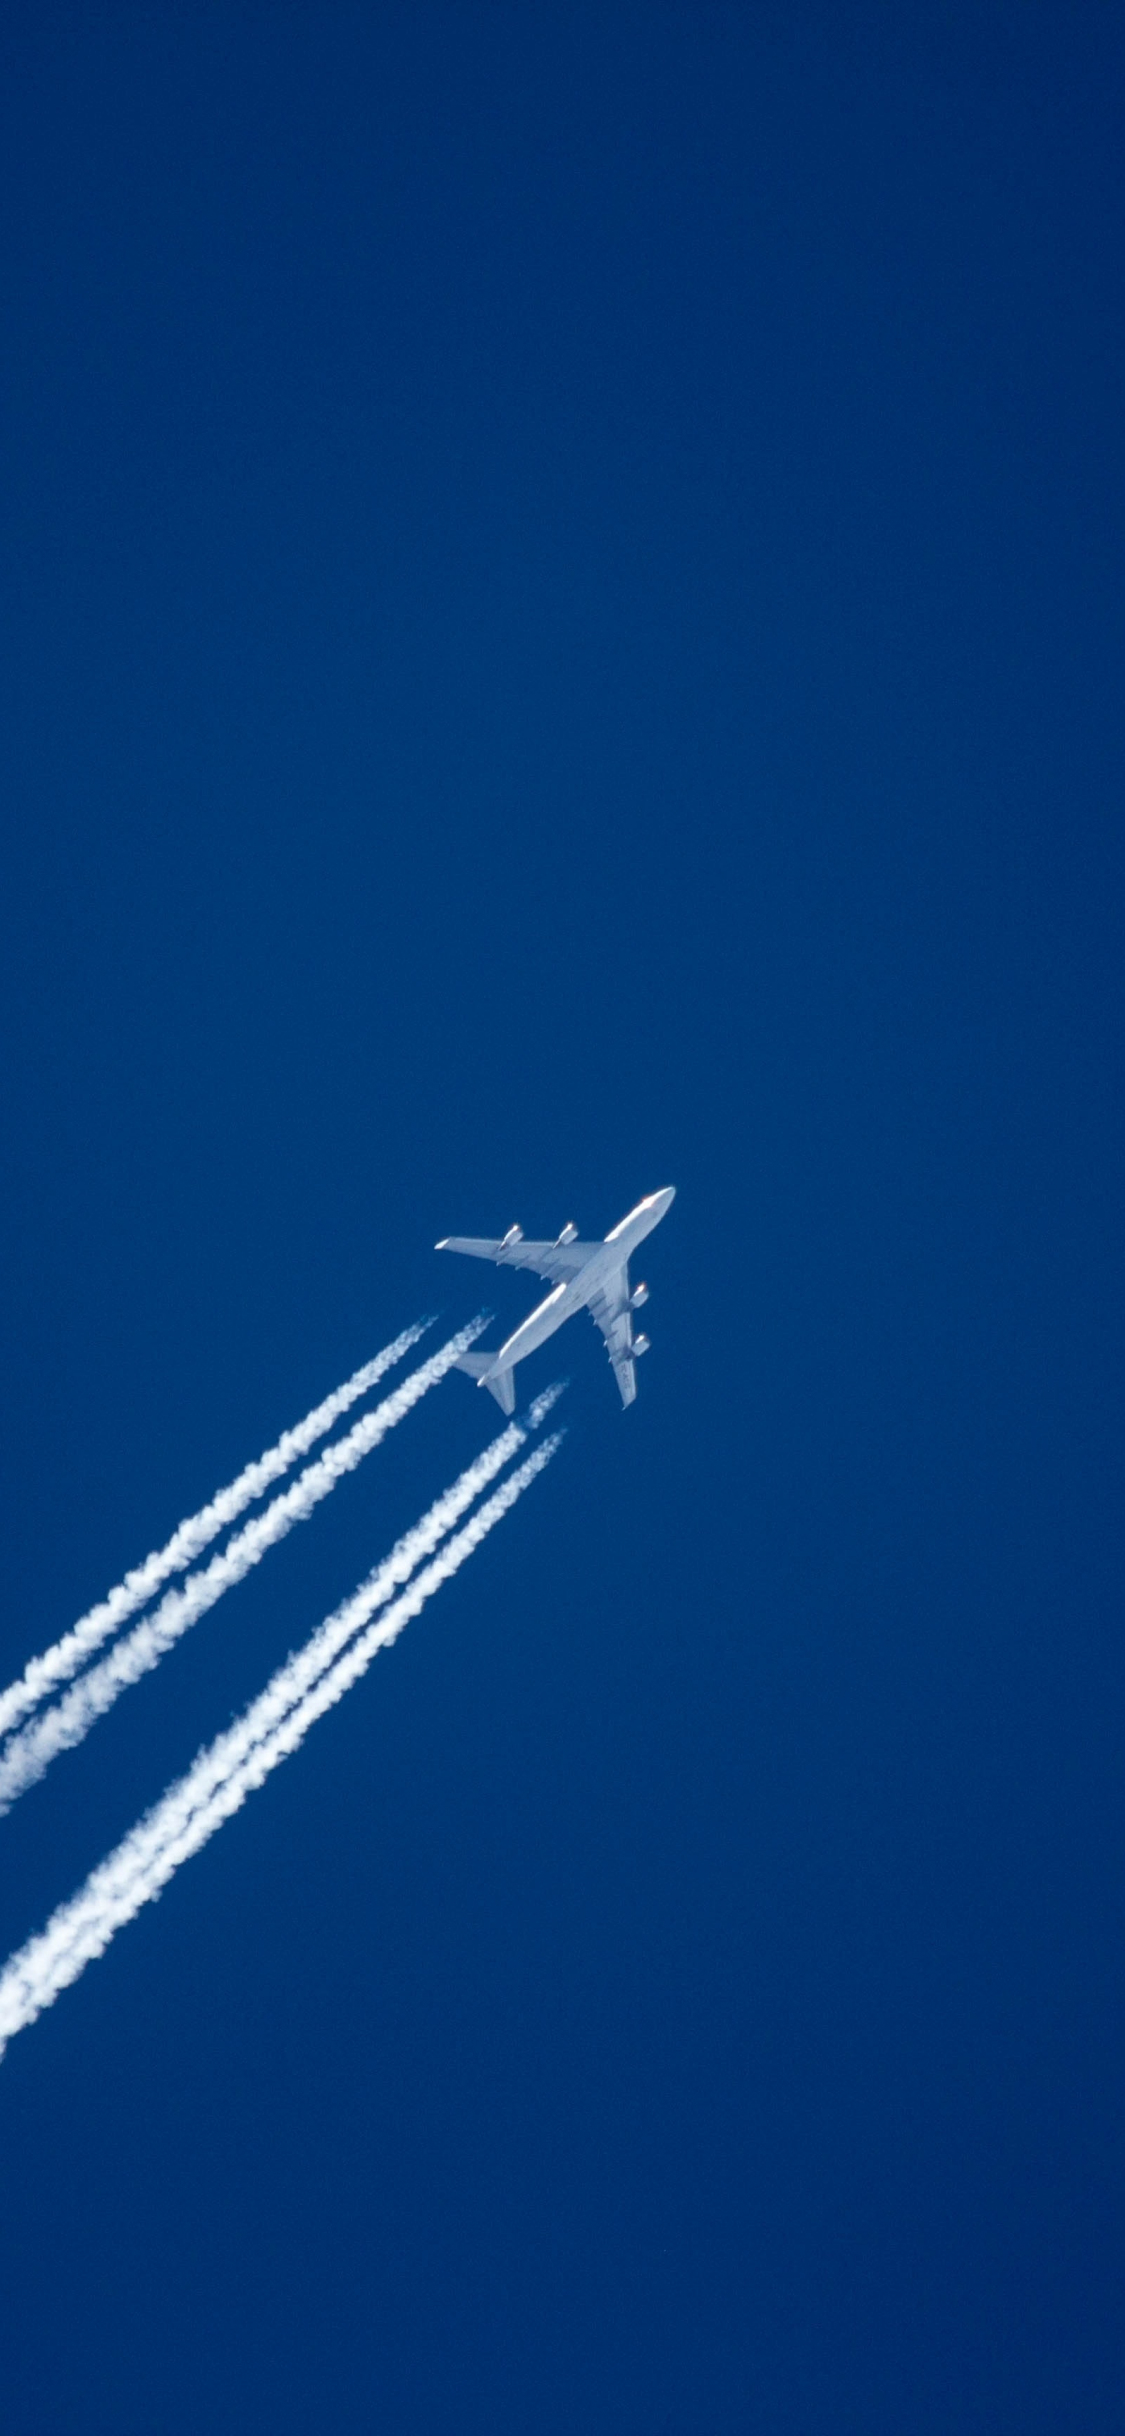 Download wallpaper x aircraft sky smoke trails minimal iphone x x hd background